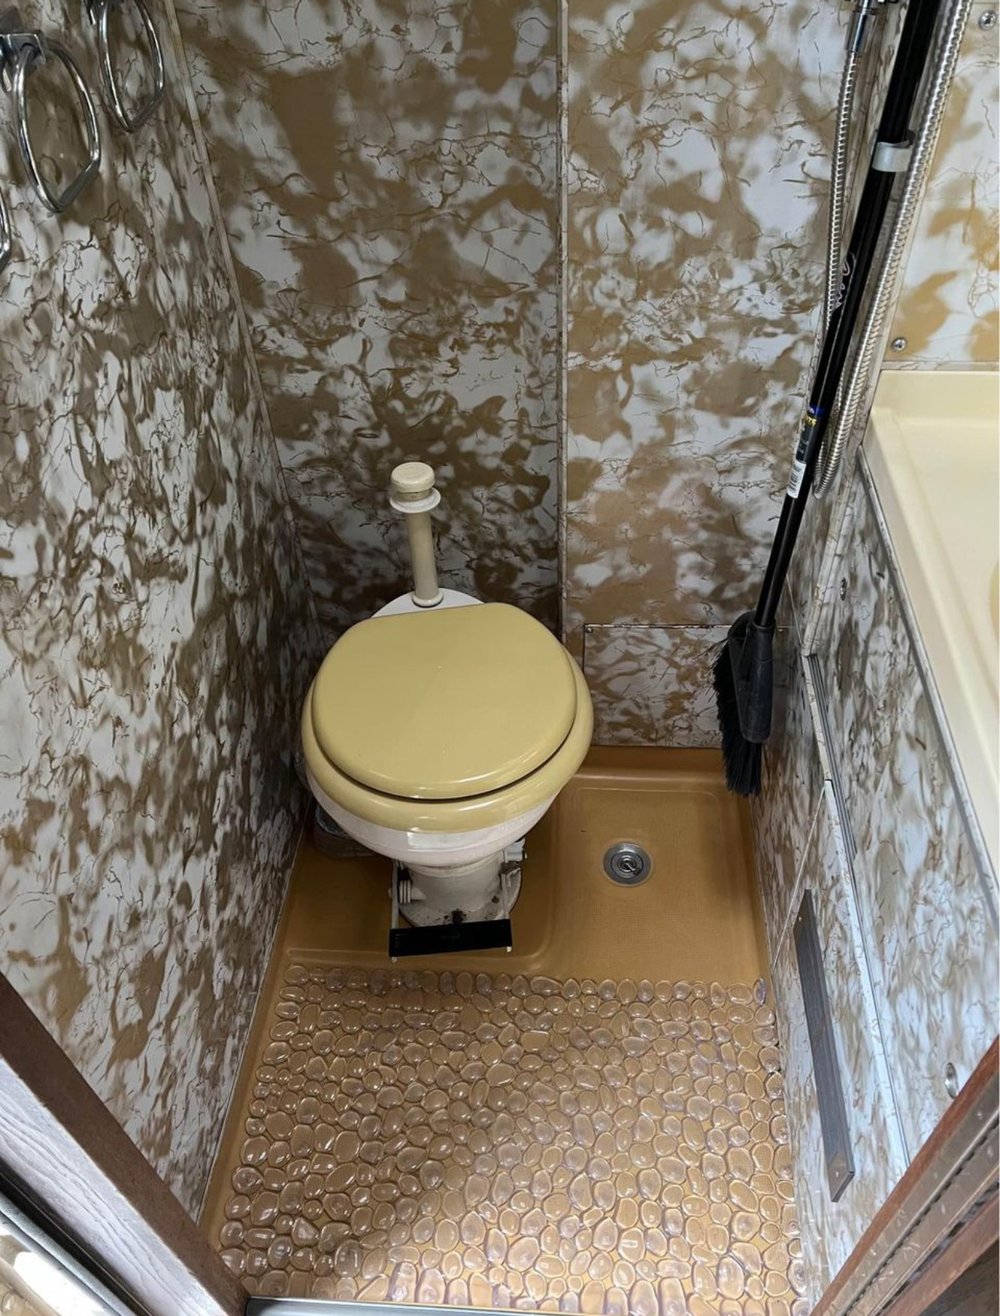 66clark_cortez_toilet.jpg